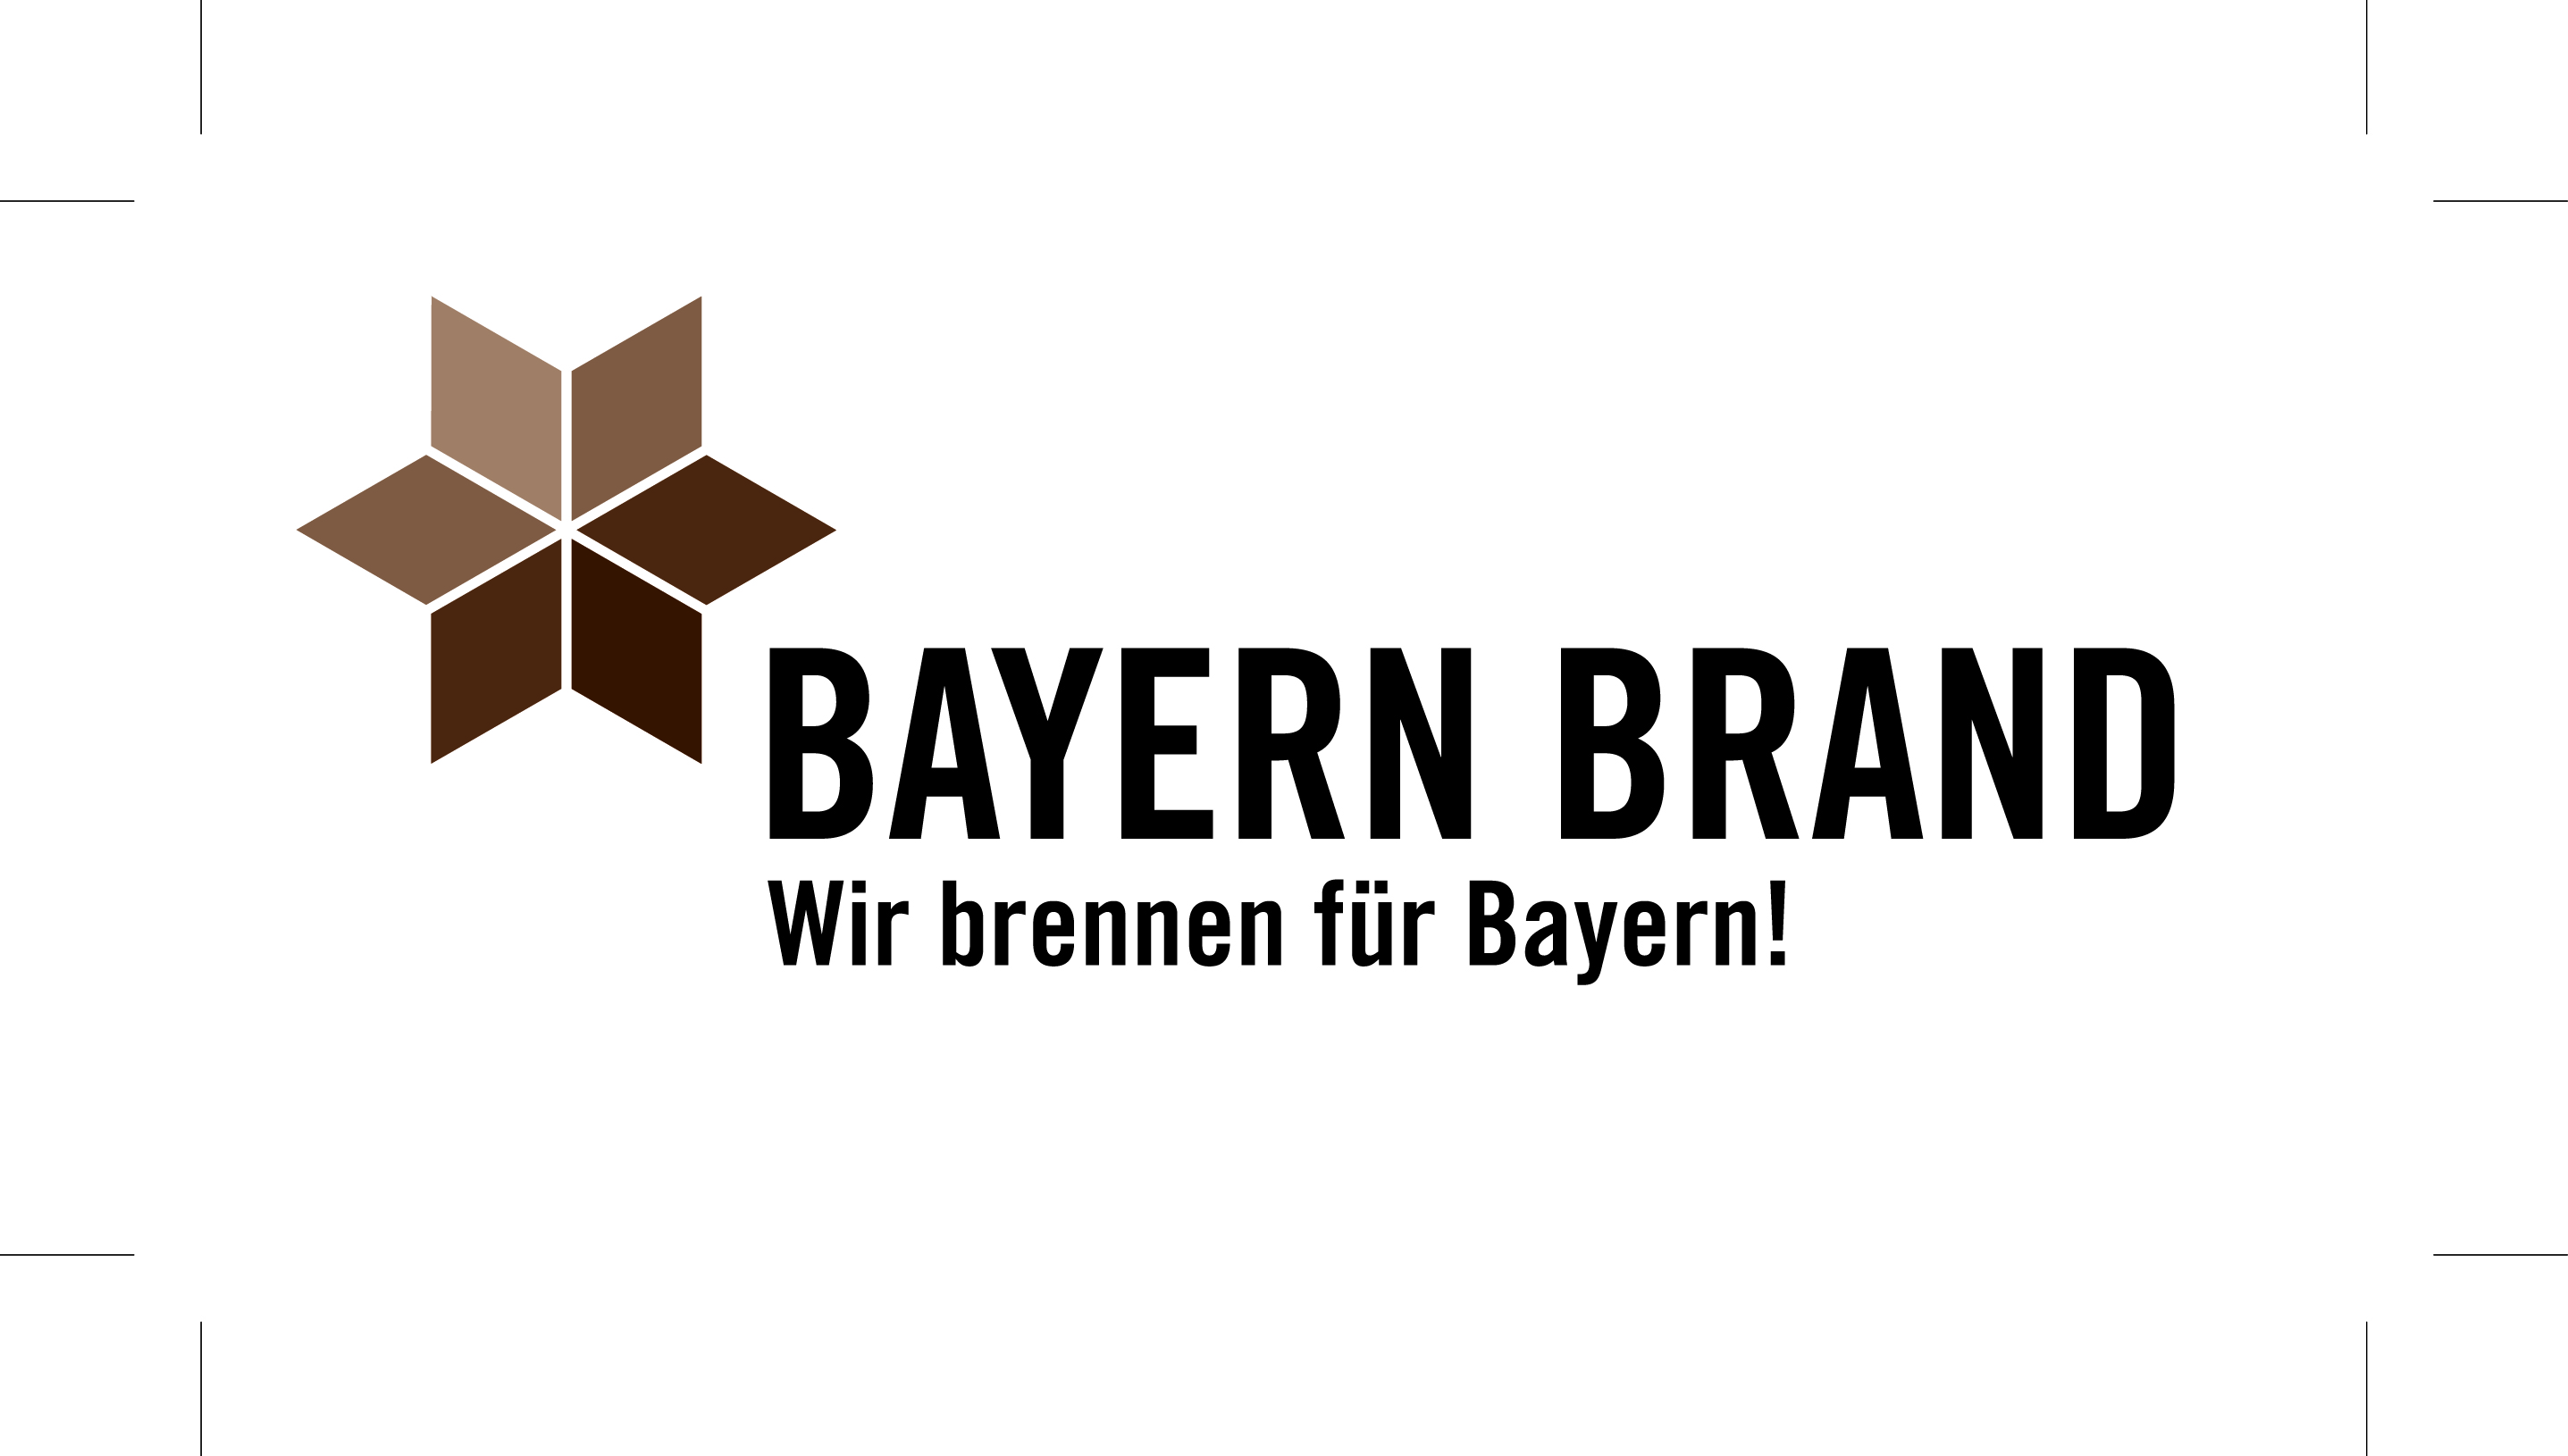 Bayern Brand